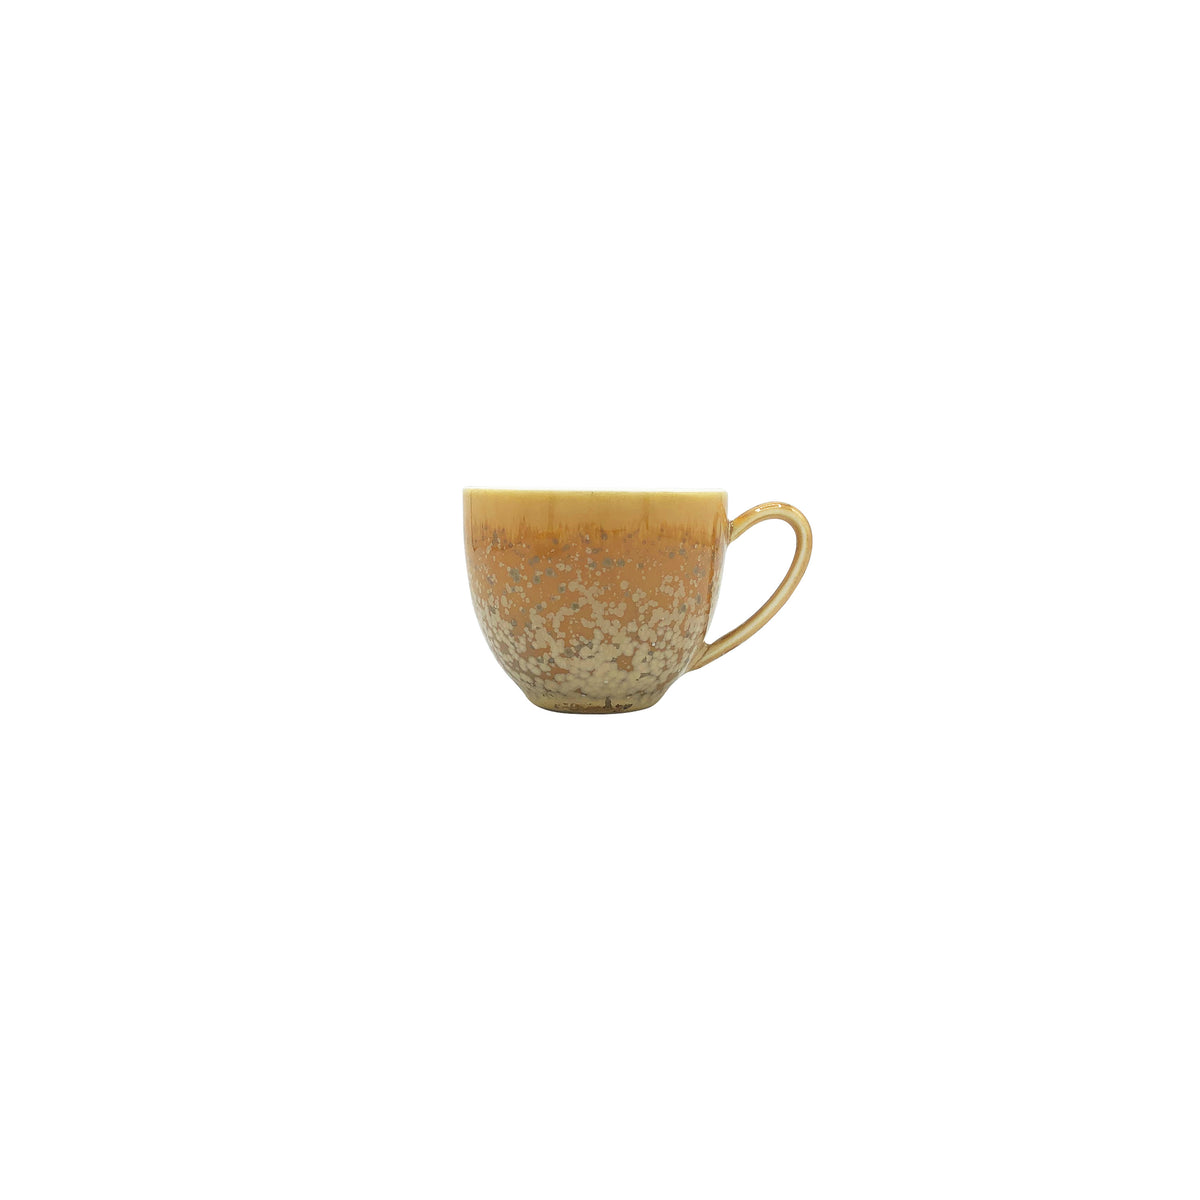 SONG Ochre - Coffee set (cup & saucer)